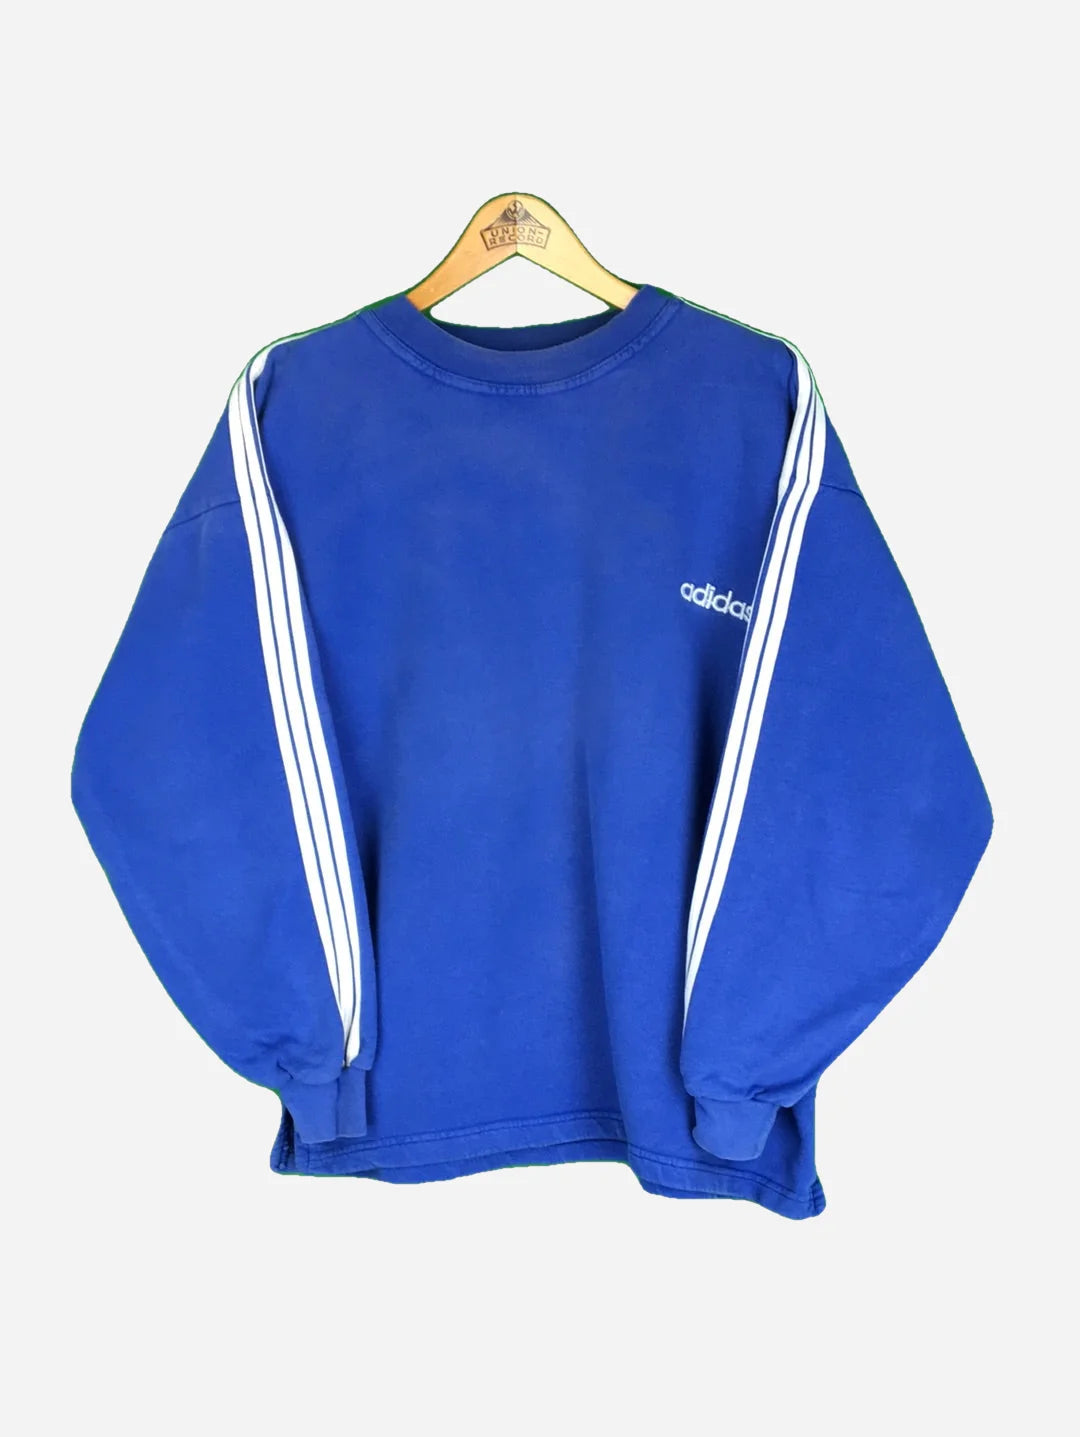 Adidas Sweater (M)